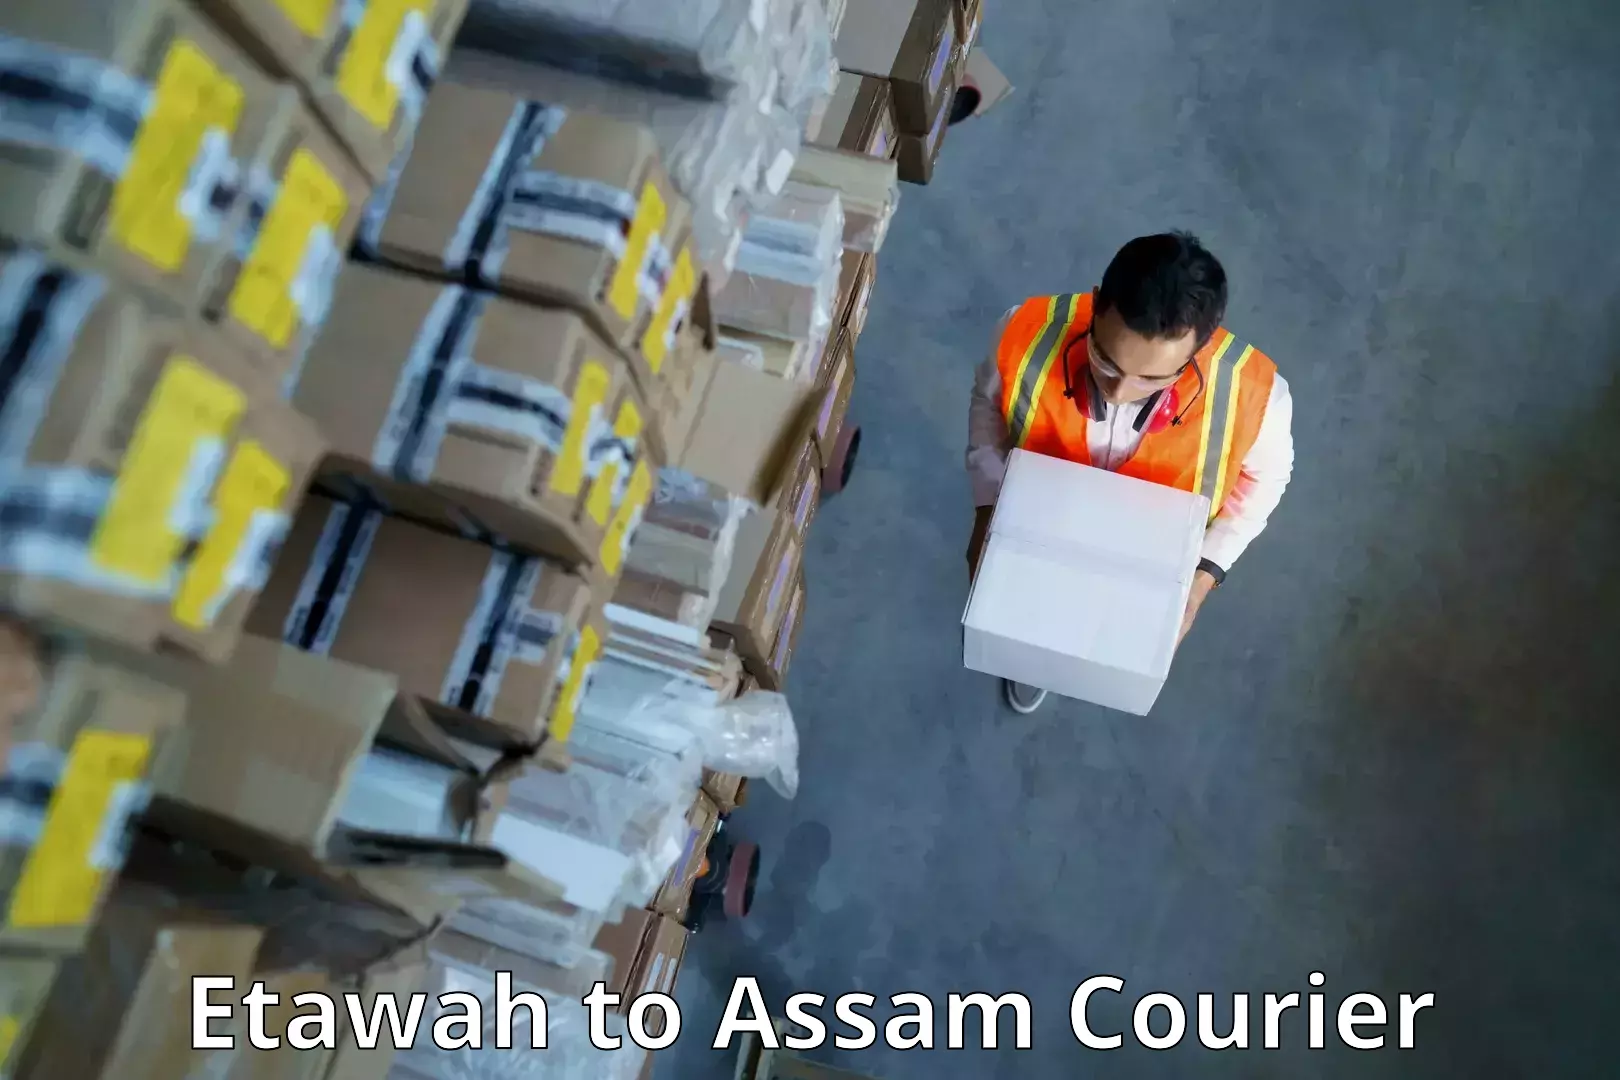 Advanced shipping network Etawah to Karbi Anglong